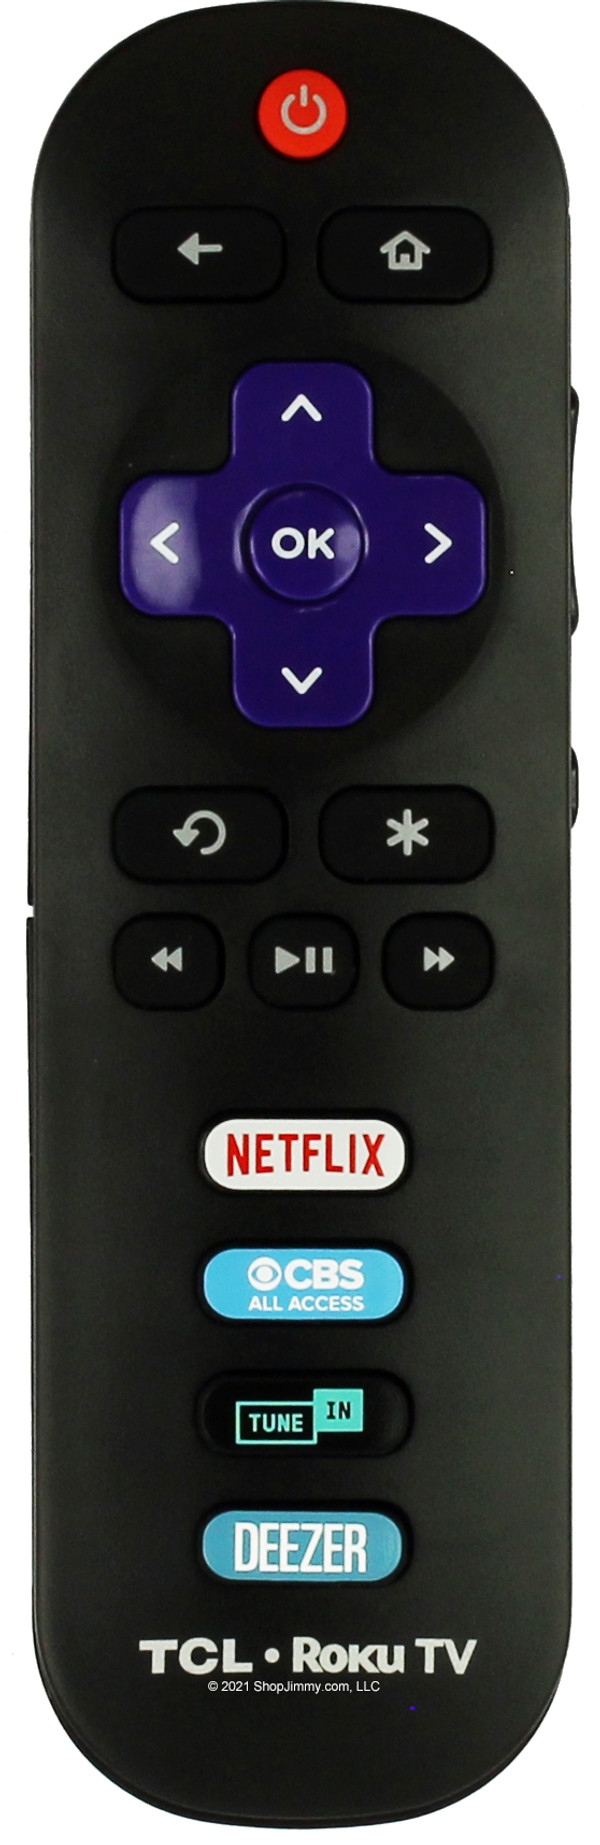 TCL RC280 Roku Remote Control w/ Netflix, CBS, Tunein, Deezer -- Open Bag